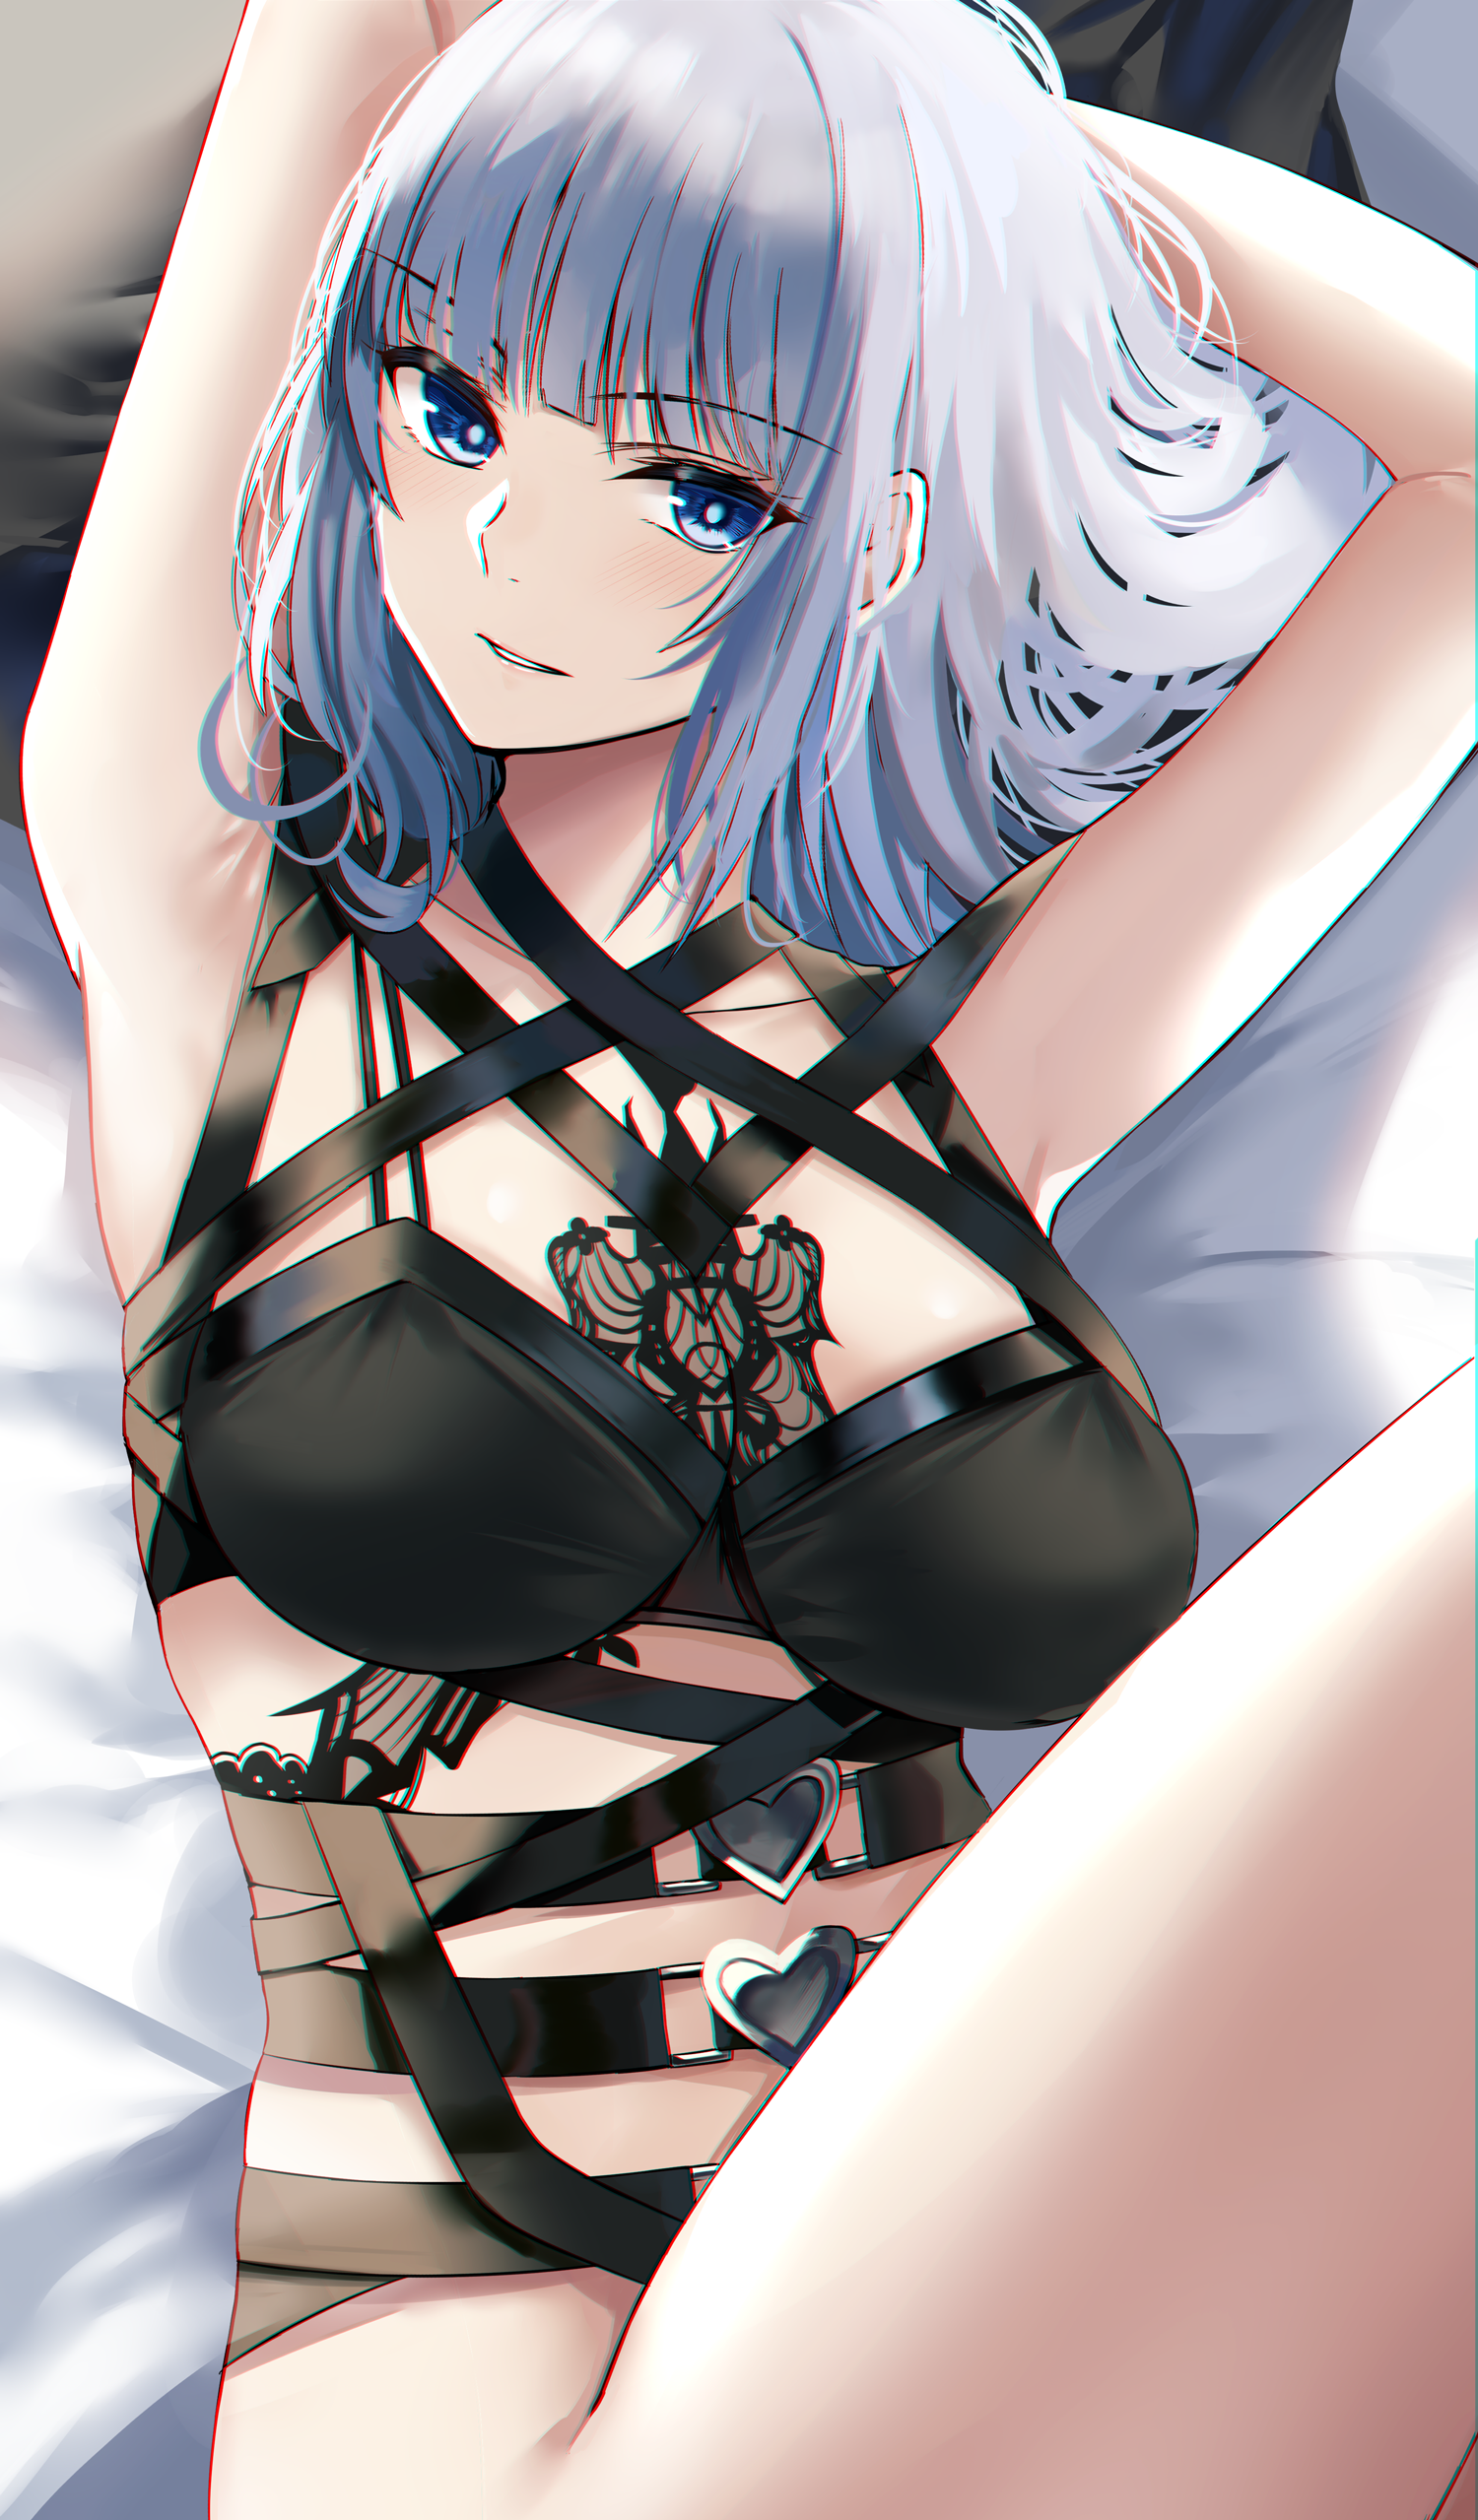 Anime 1500x2558 anime anime girls digital art artwork 2D portrait display blue hair blue eyes bra bottomless in bed Nicky W body harness